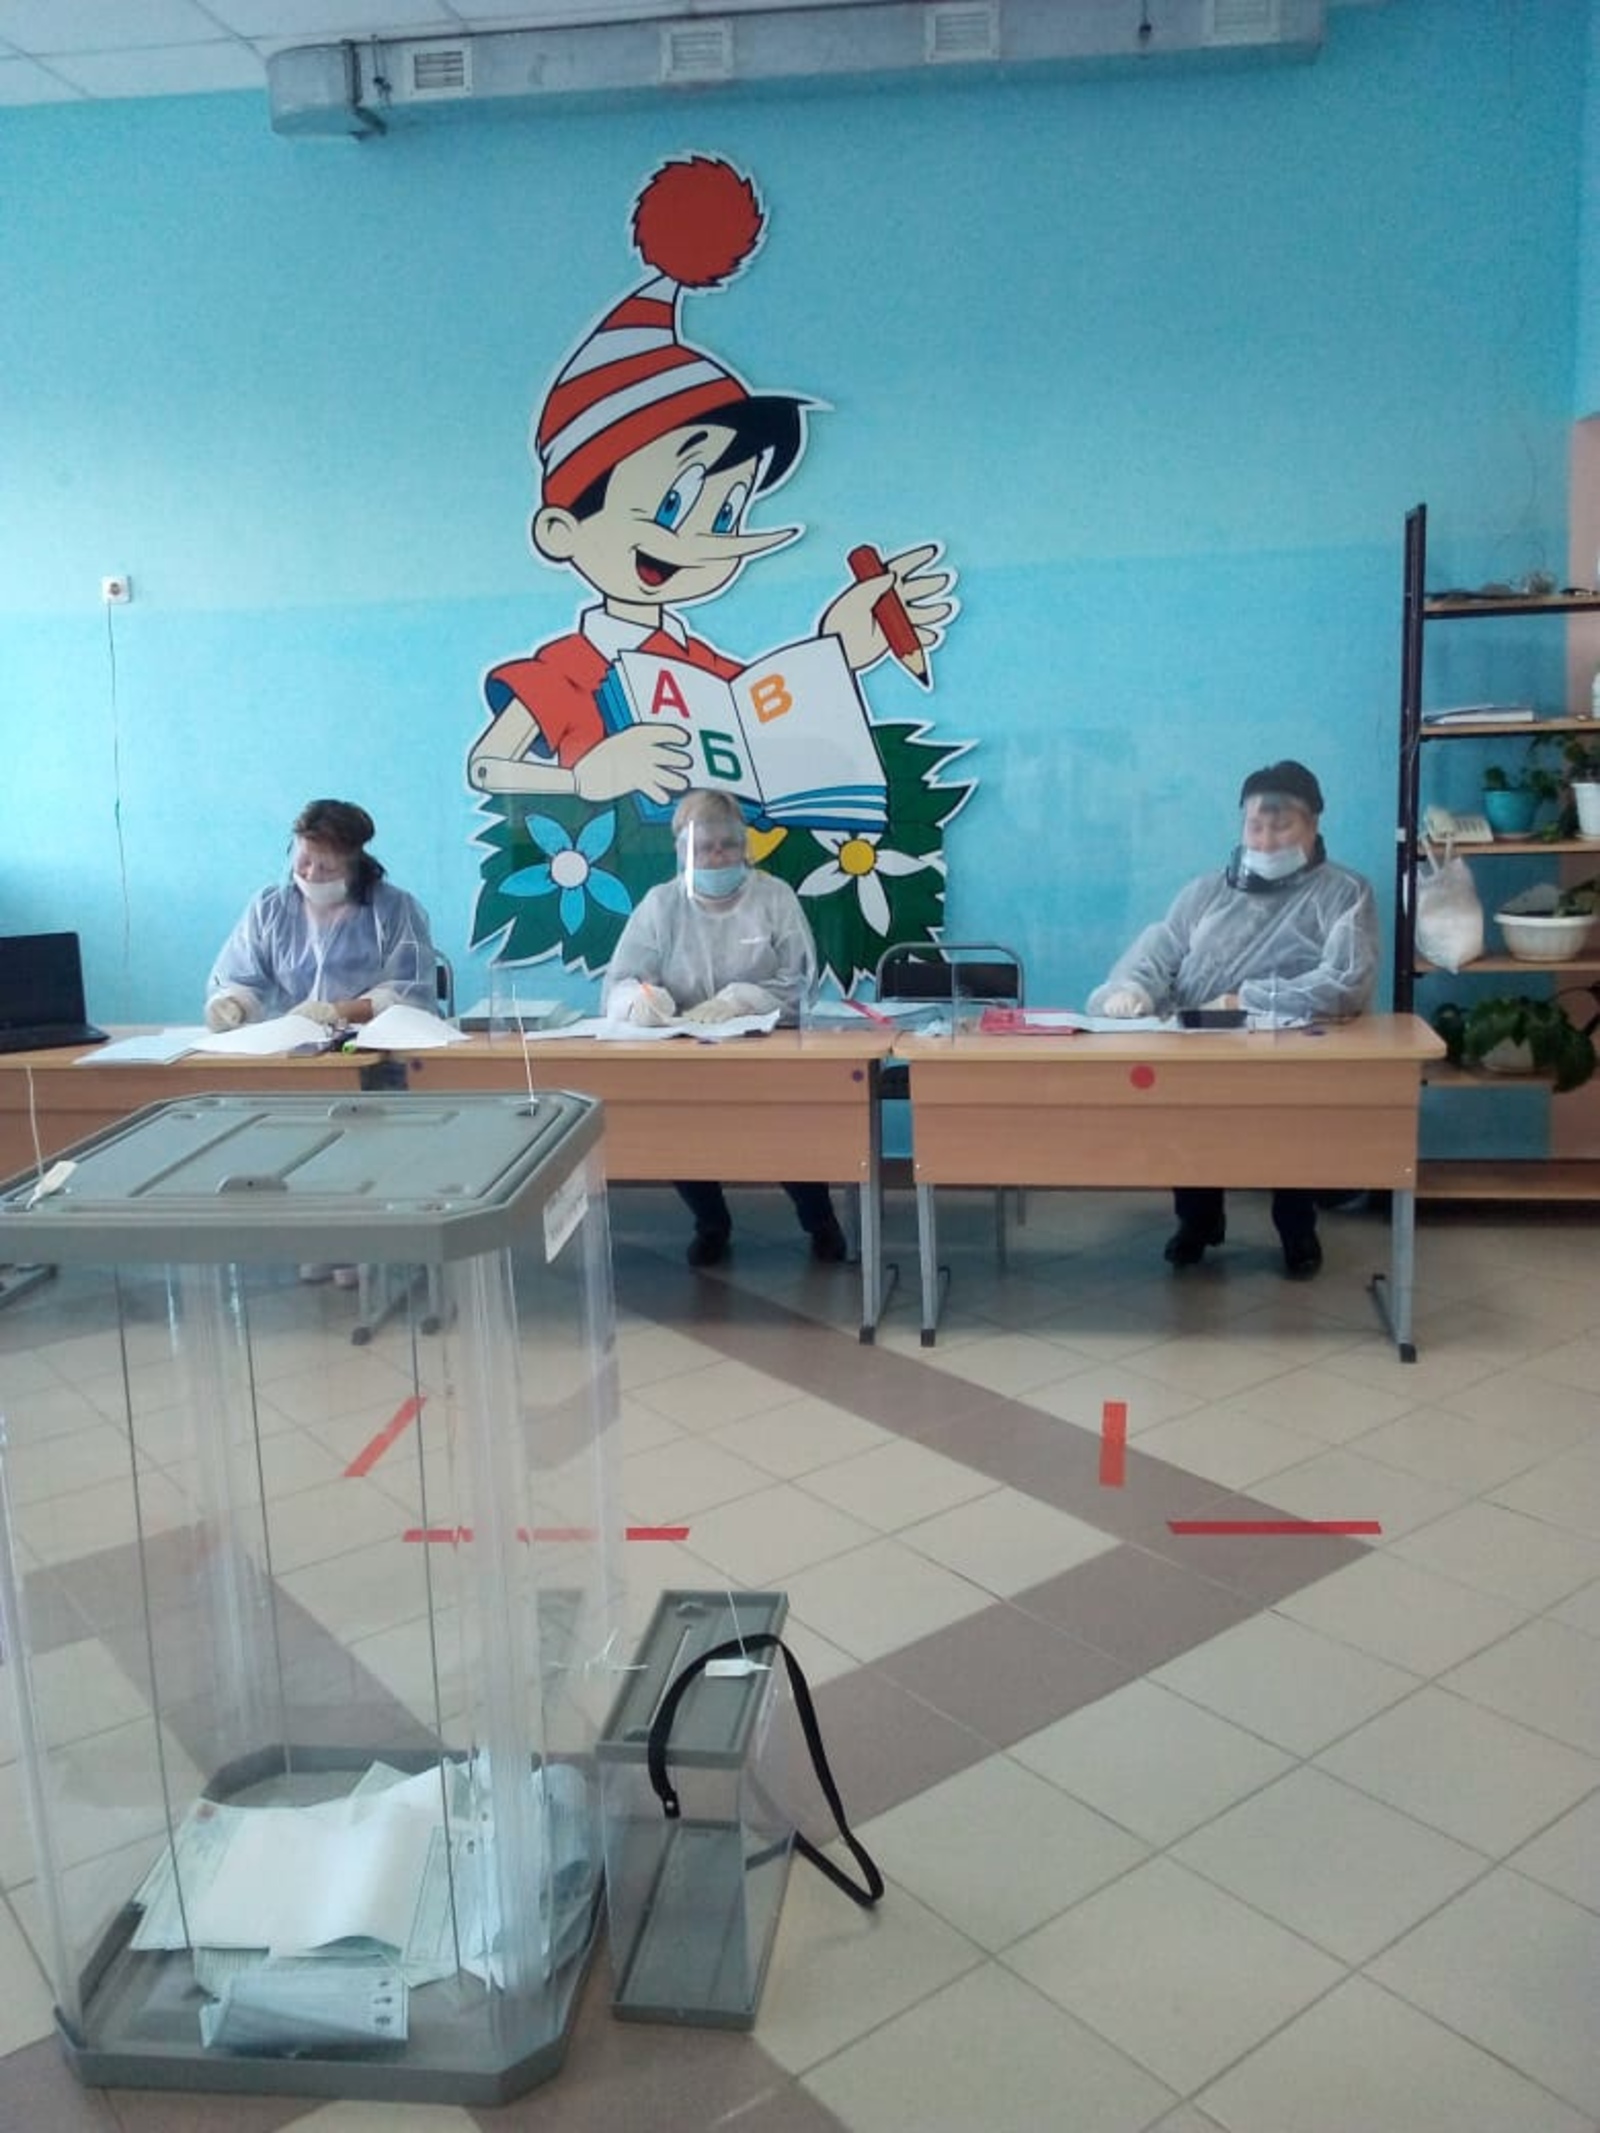 В деревне Радио в Башкирии любят радио и активно голосуют